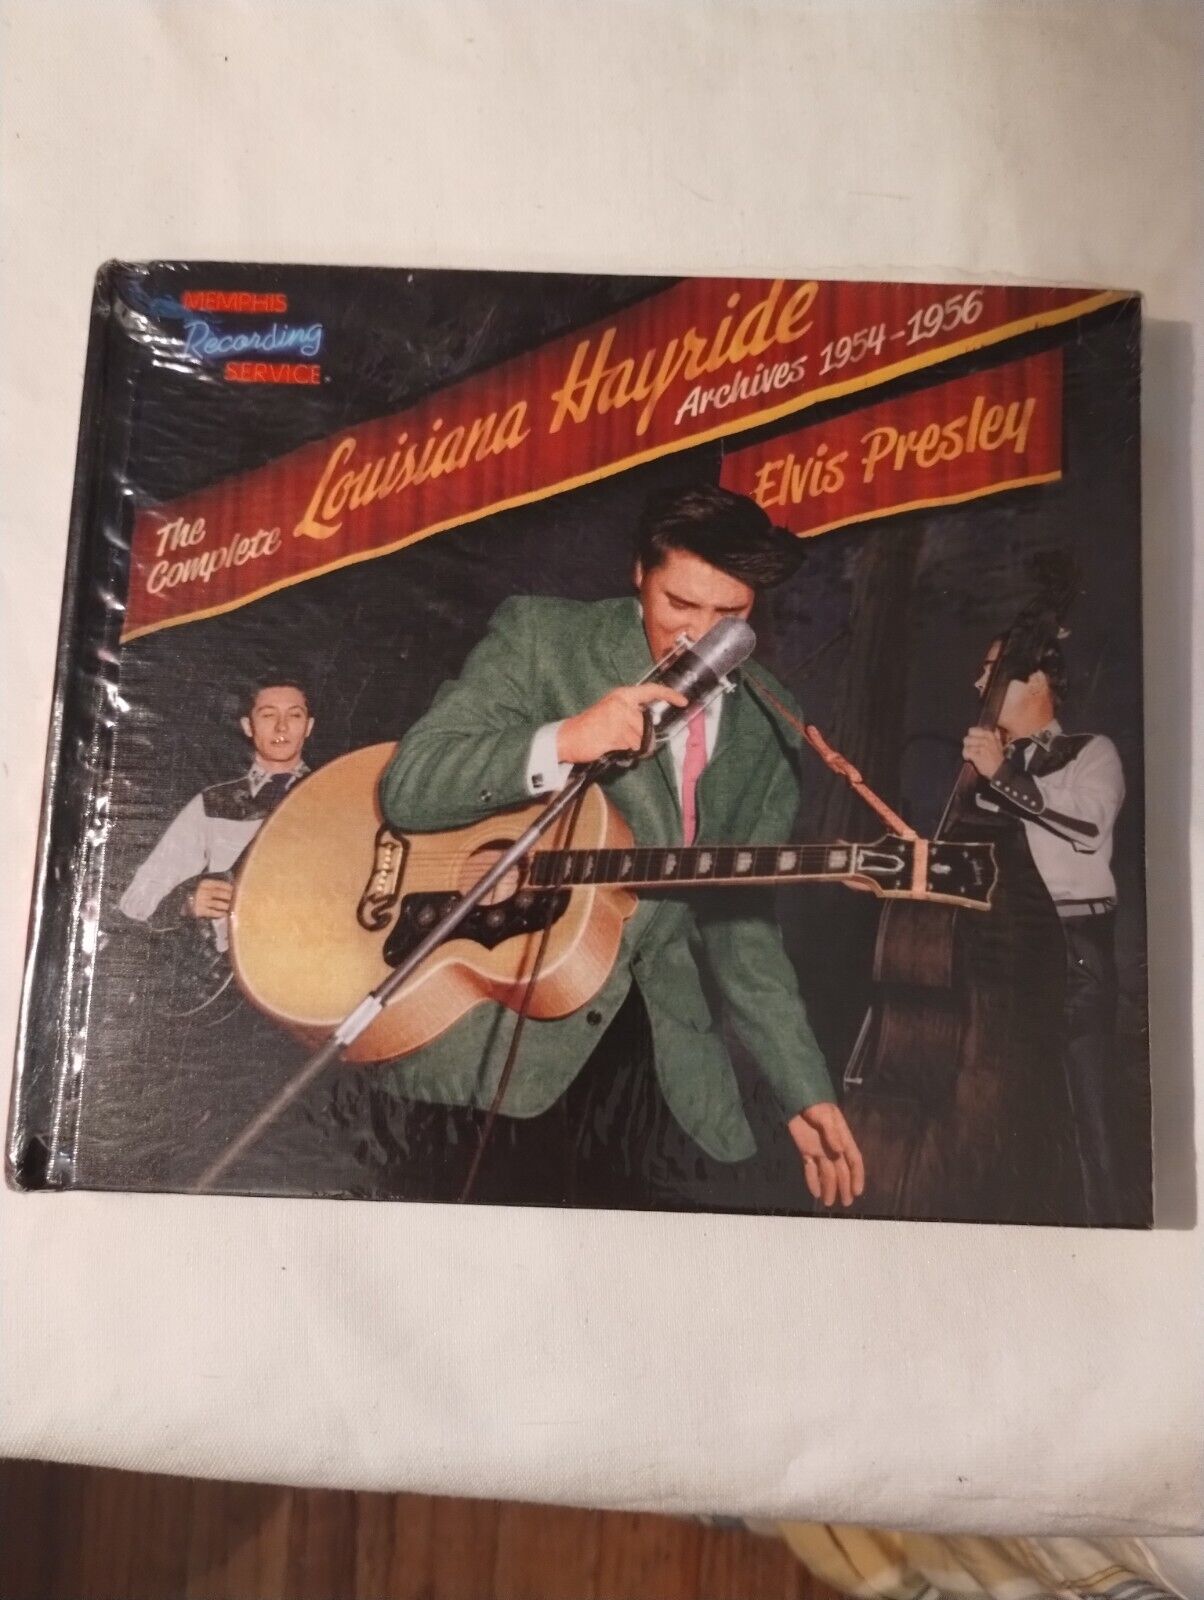 The Complete Louisiana Hayride Archives 1954-1956 [CD... - Elvis Presley CD 2QLN